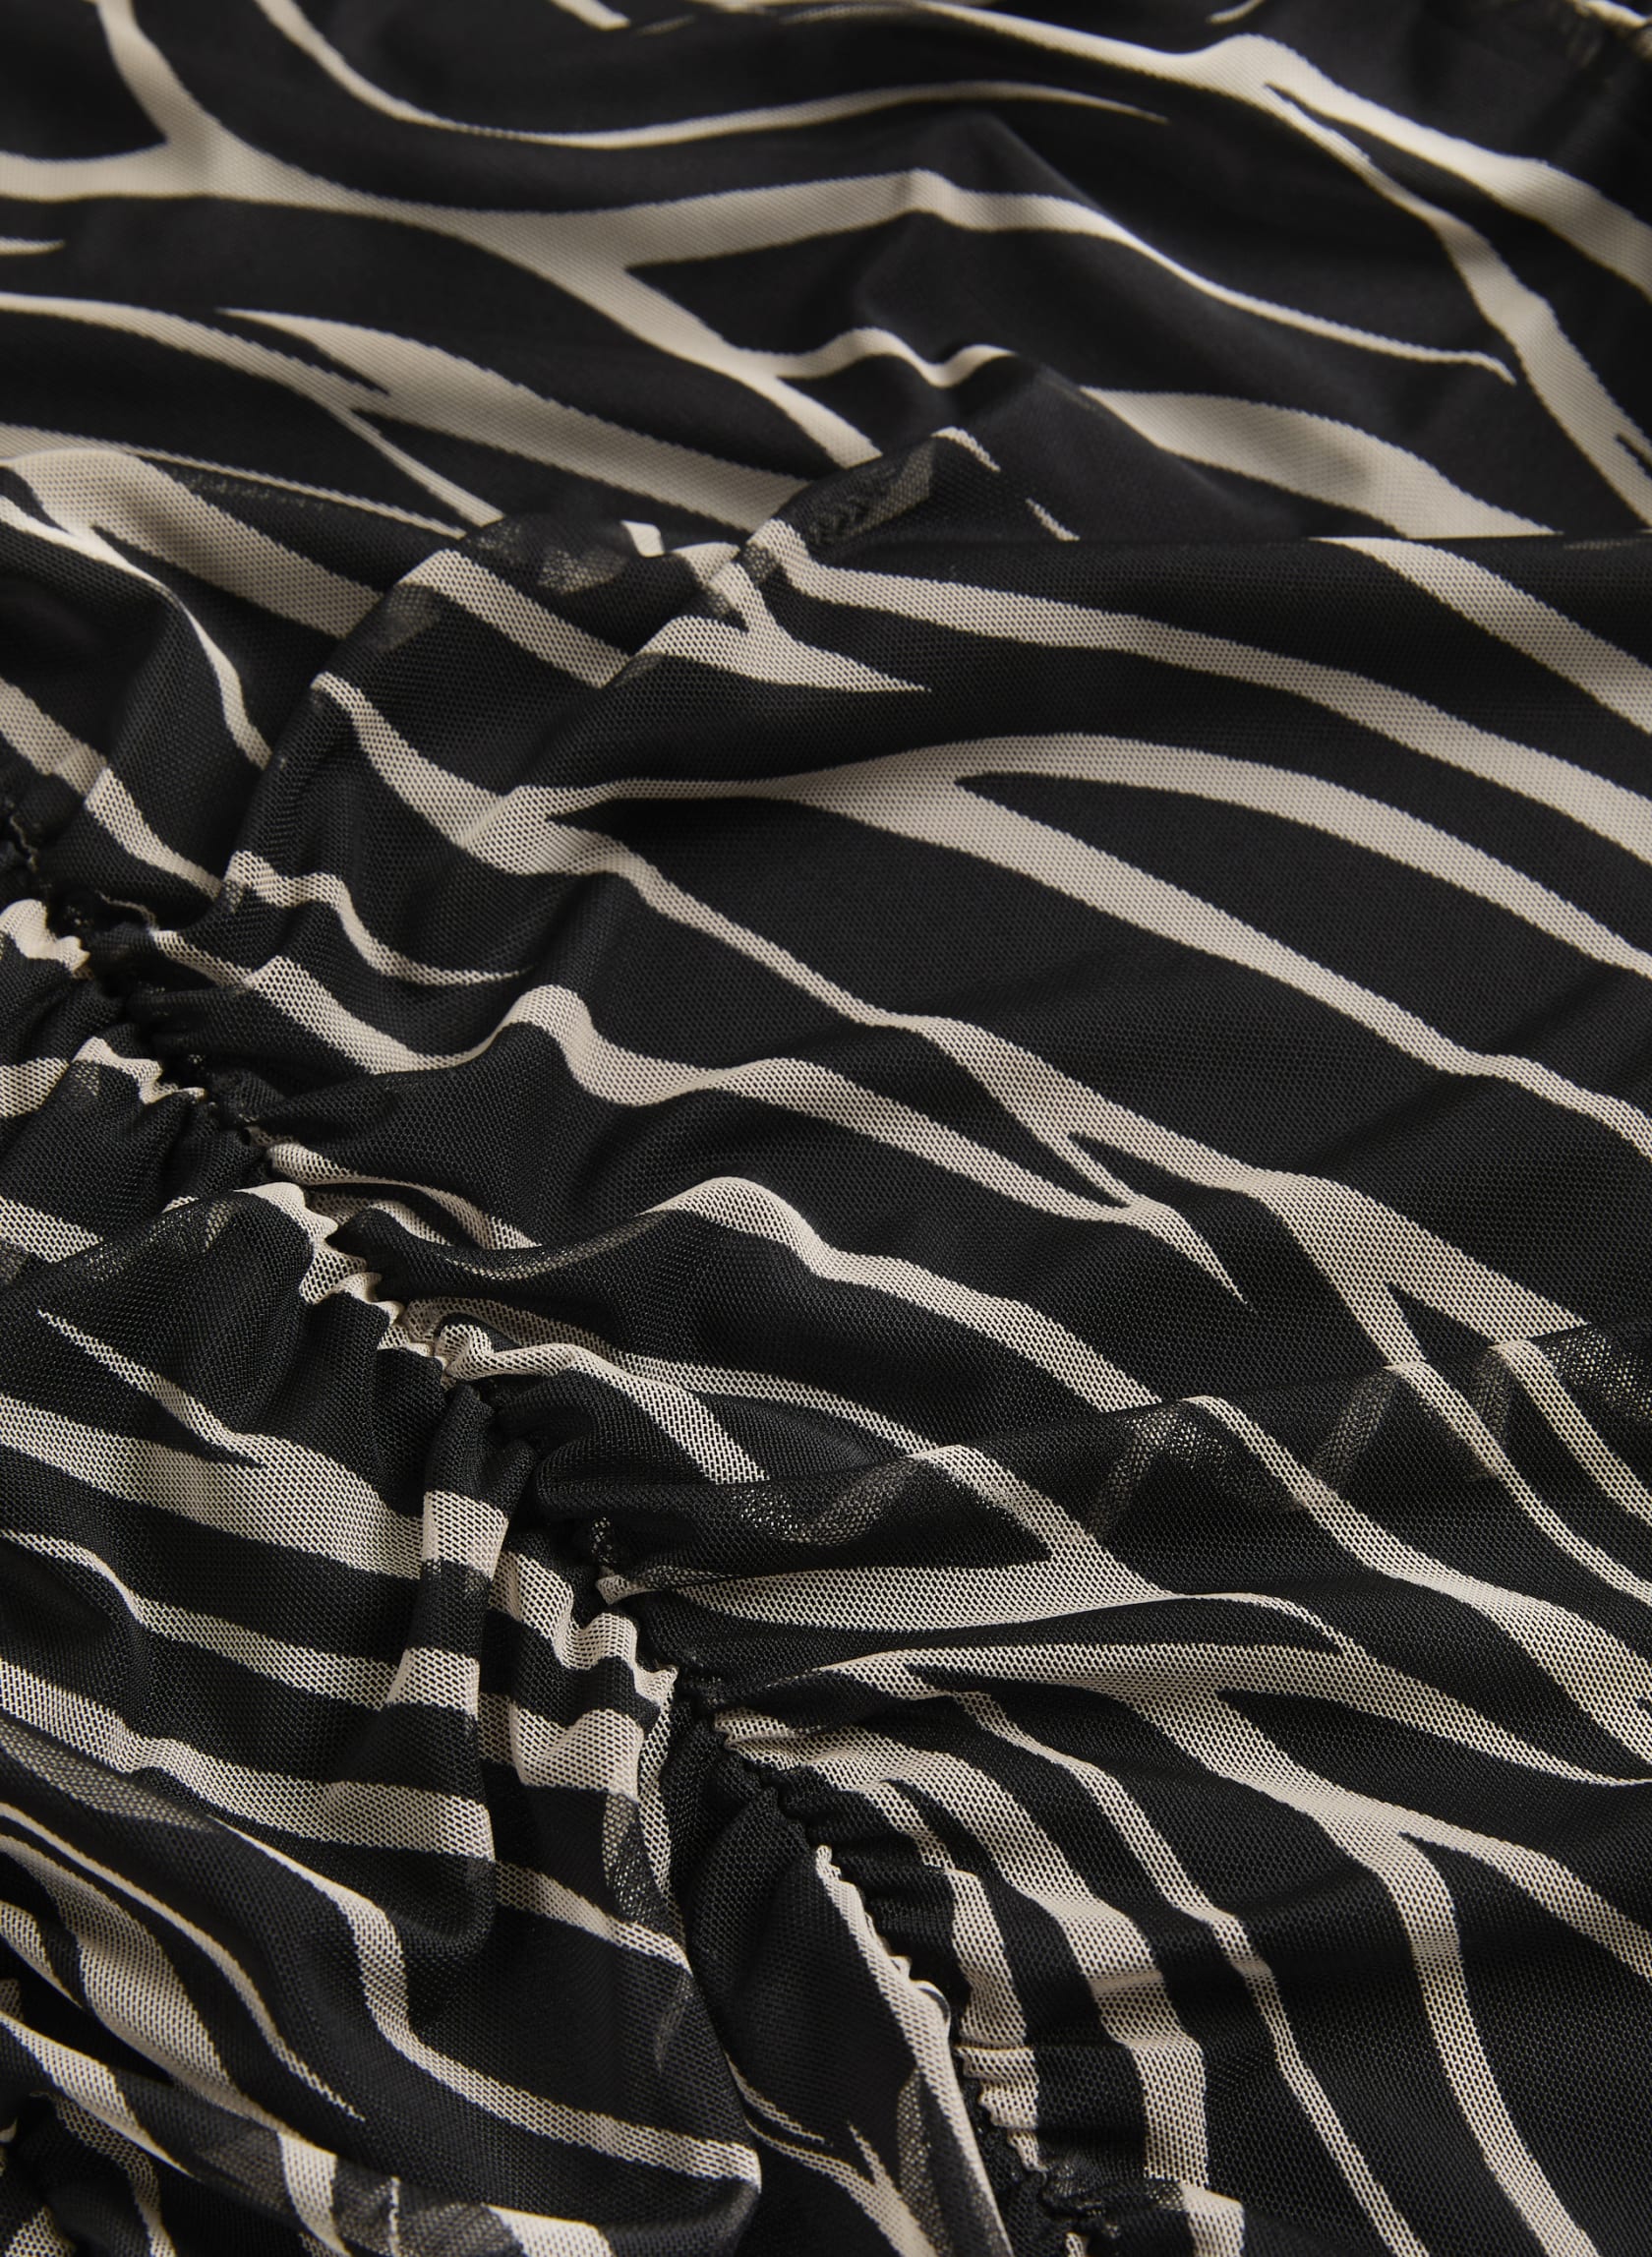 Zebra Print Sleeveless Top